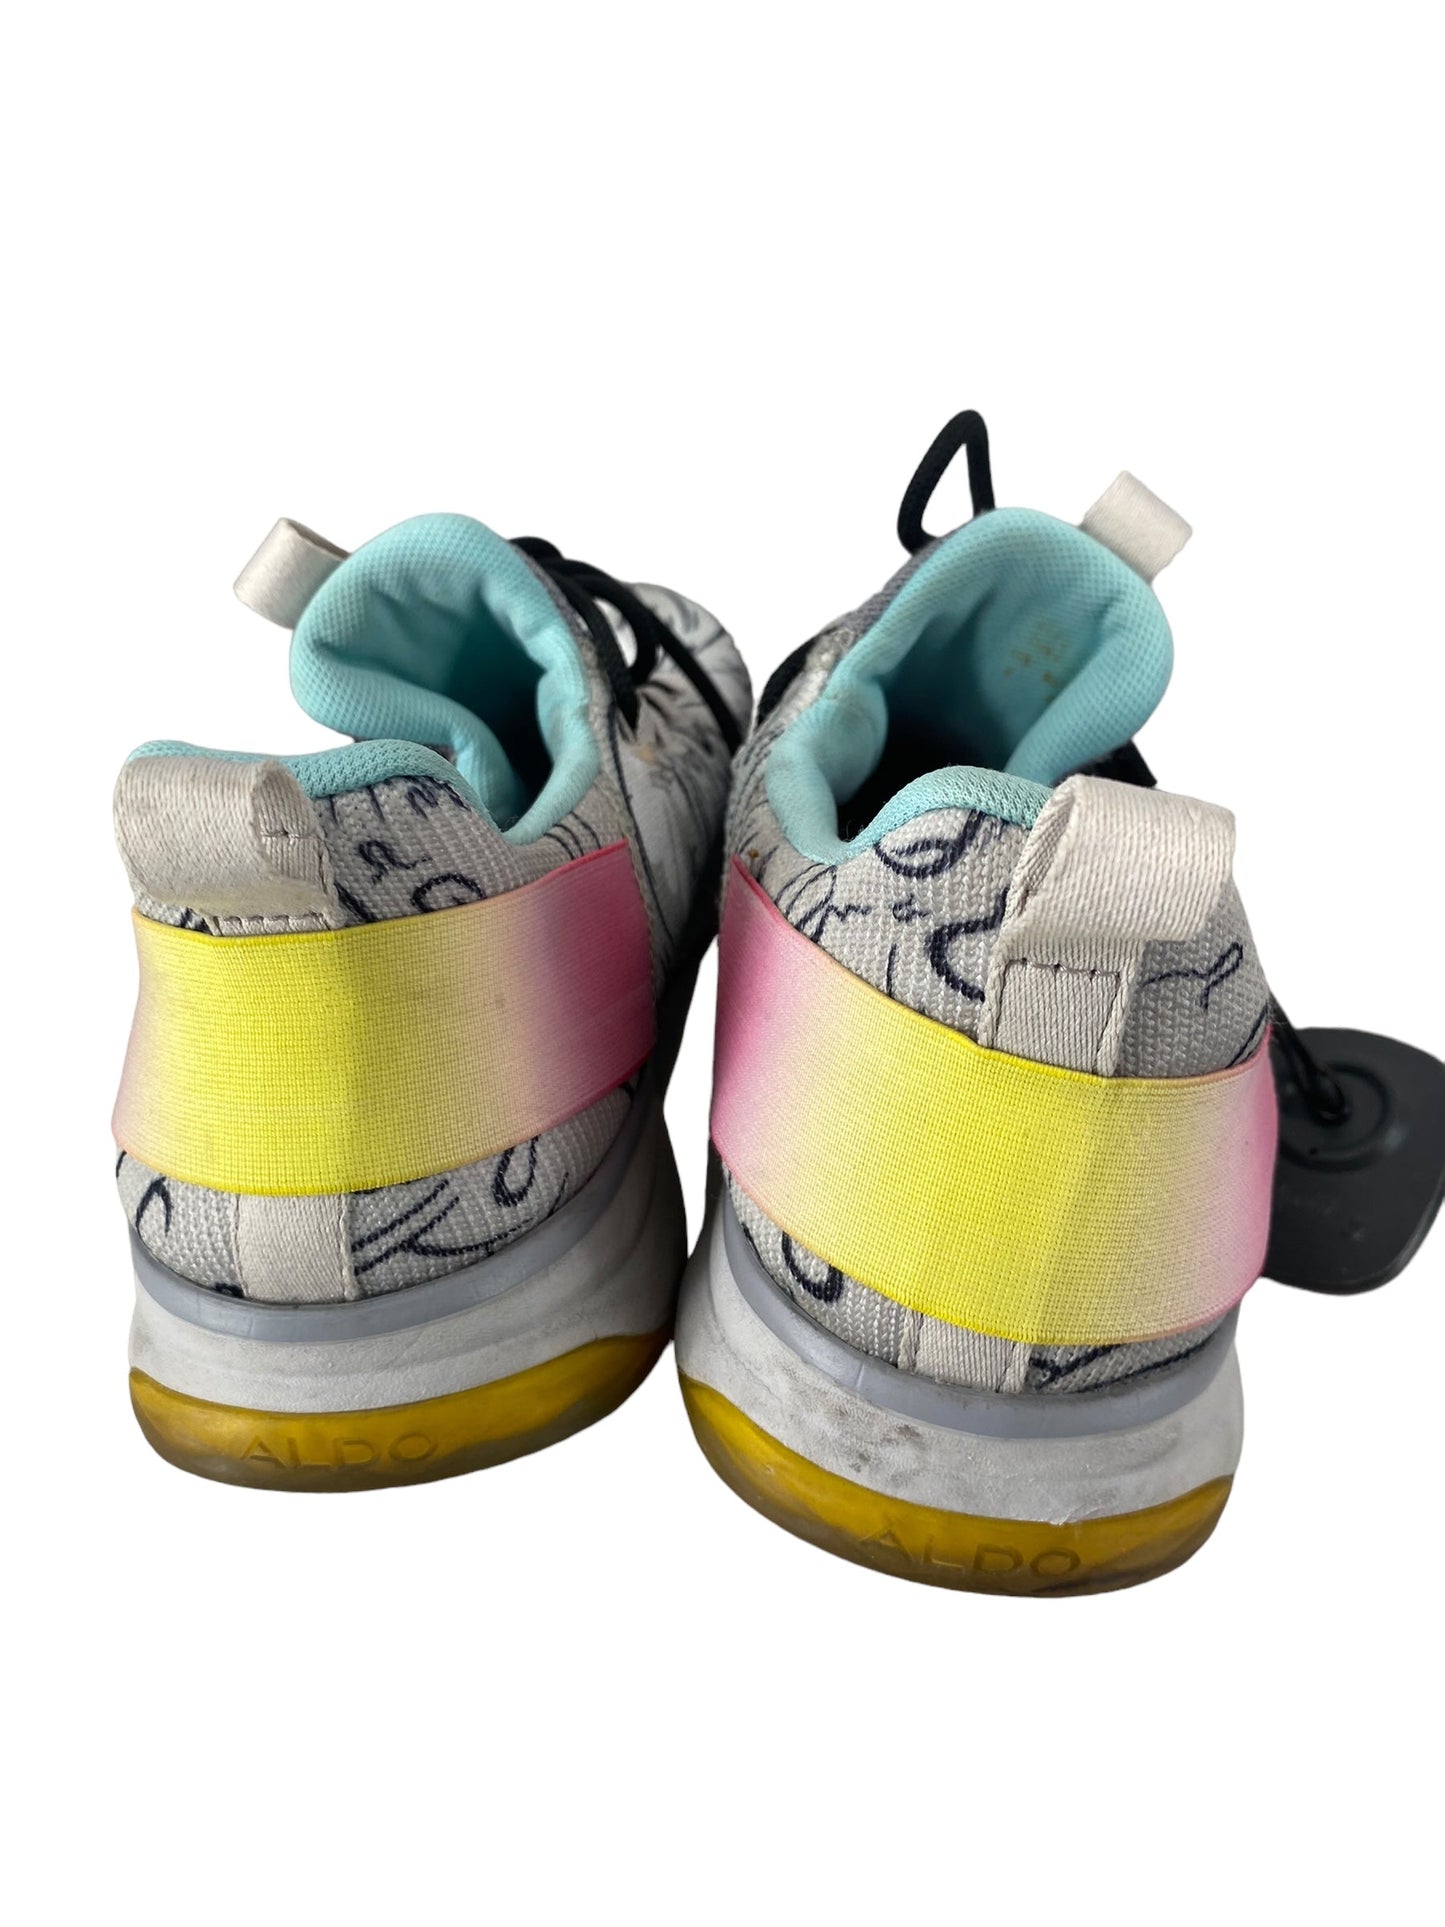 Grey Shoes Athletic Aldo, Size 8